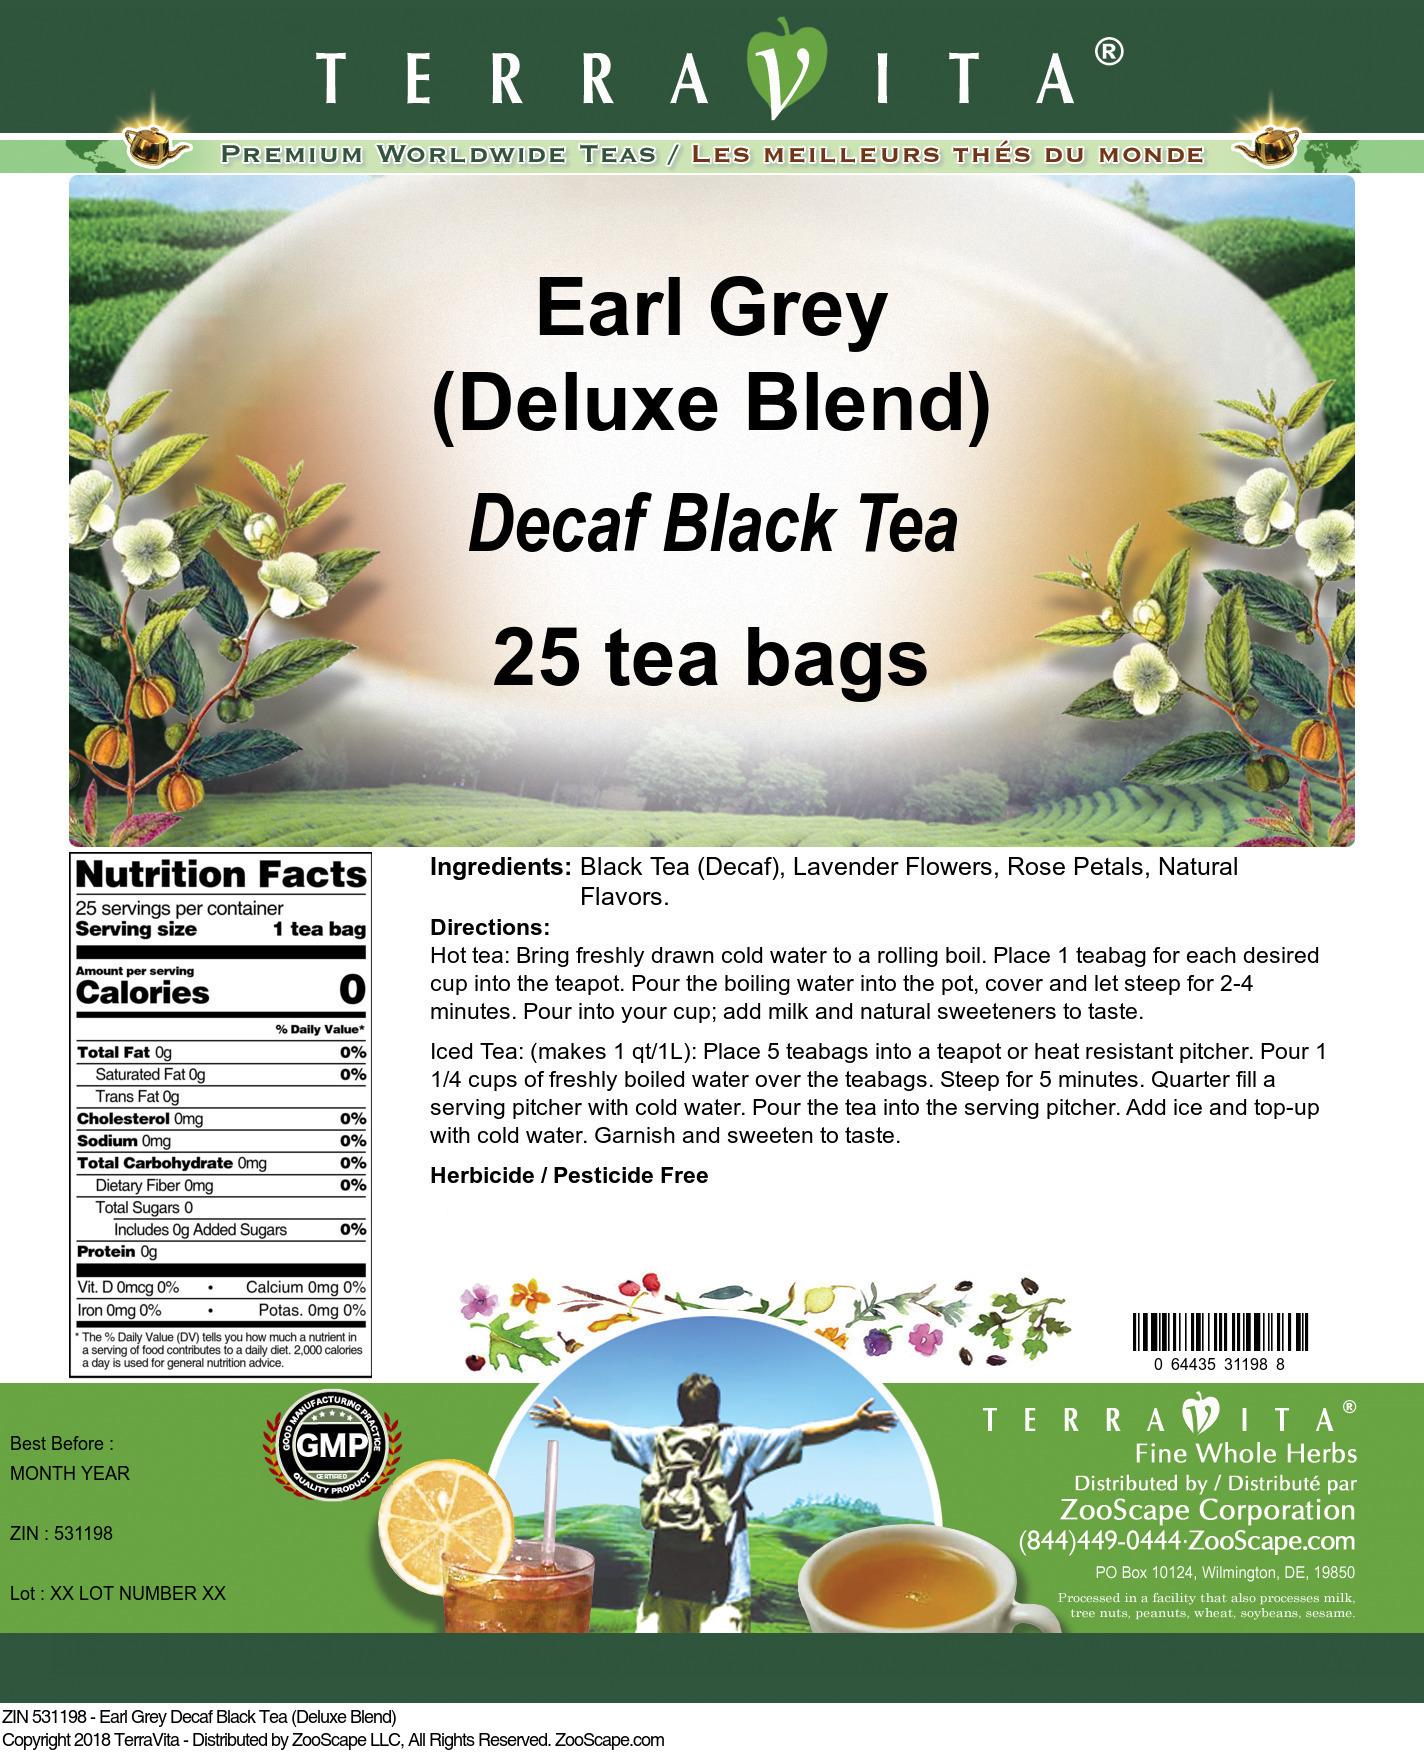 Earl Grey Decaf Black Tea (Deluxe Blend) - Label